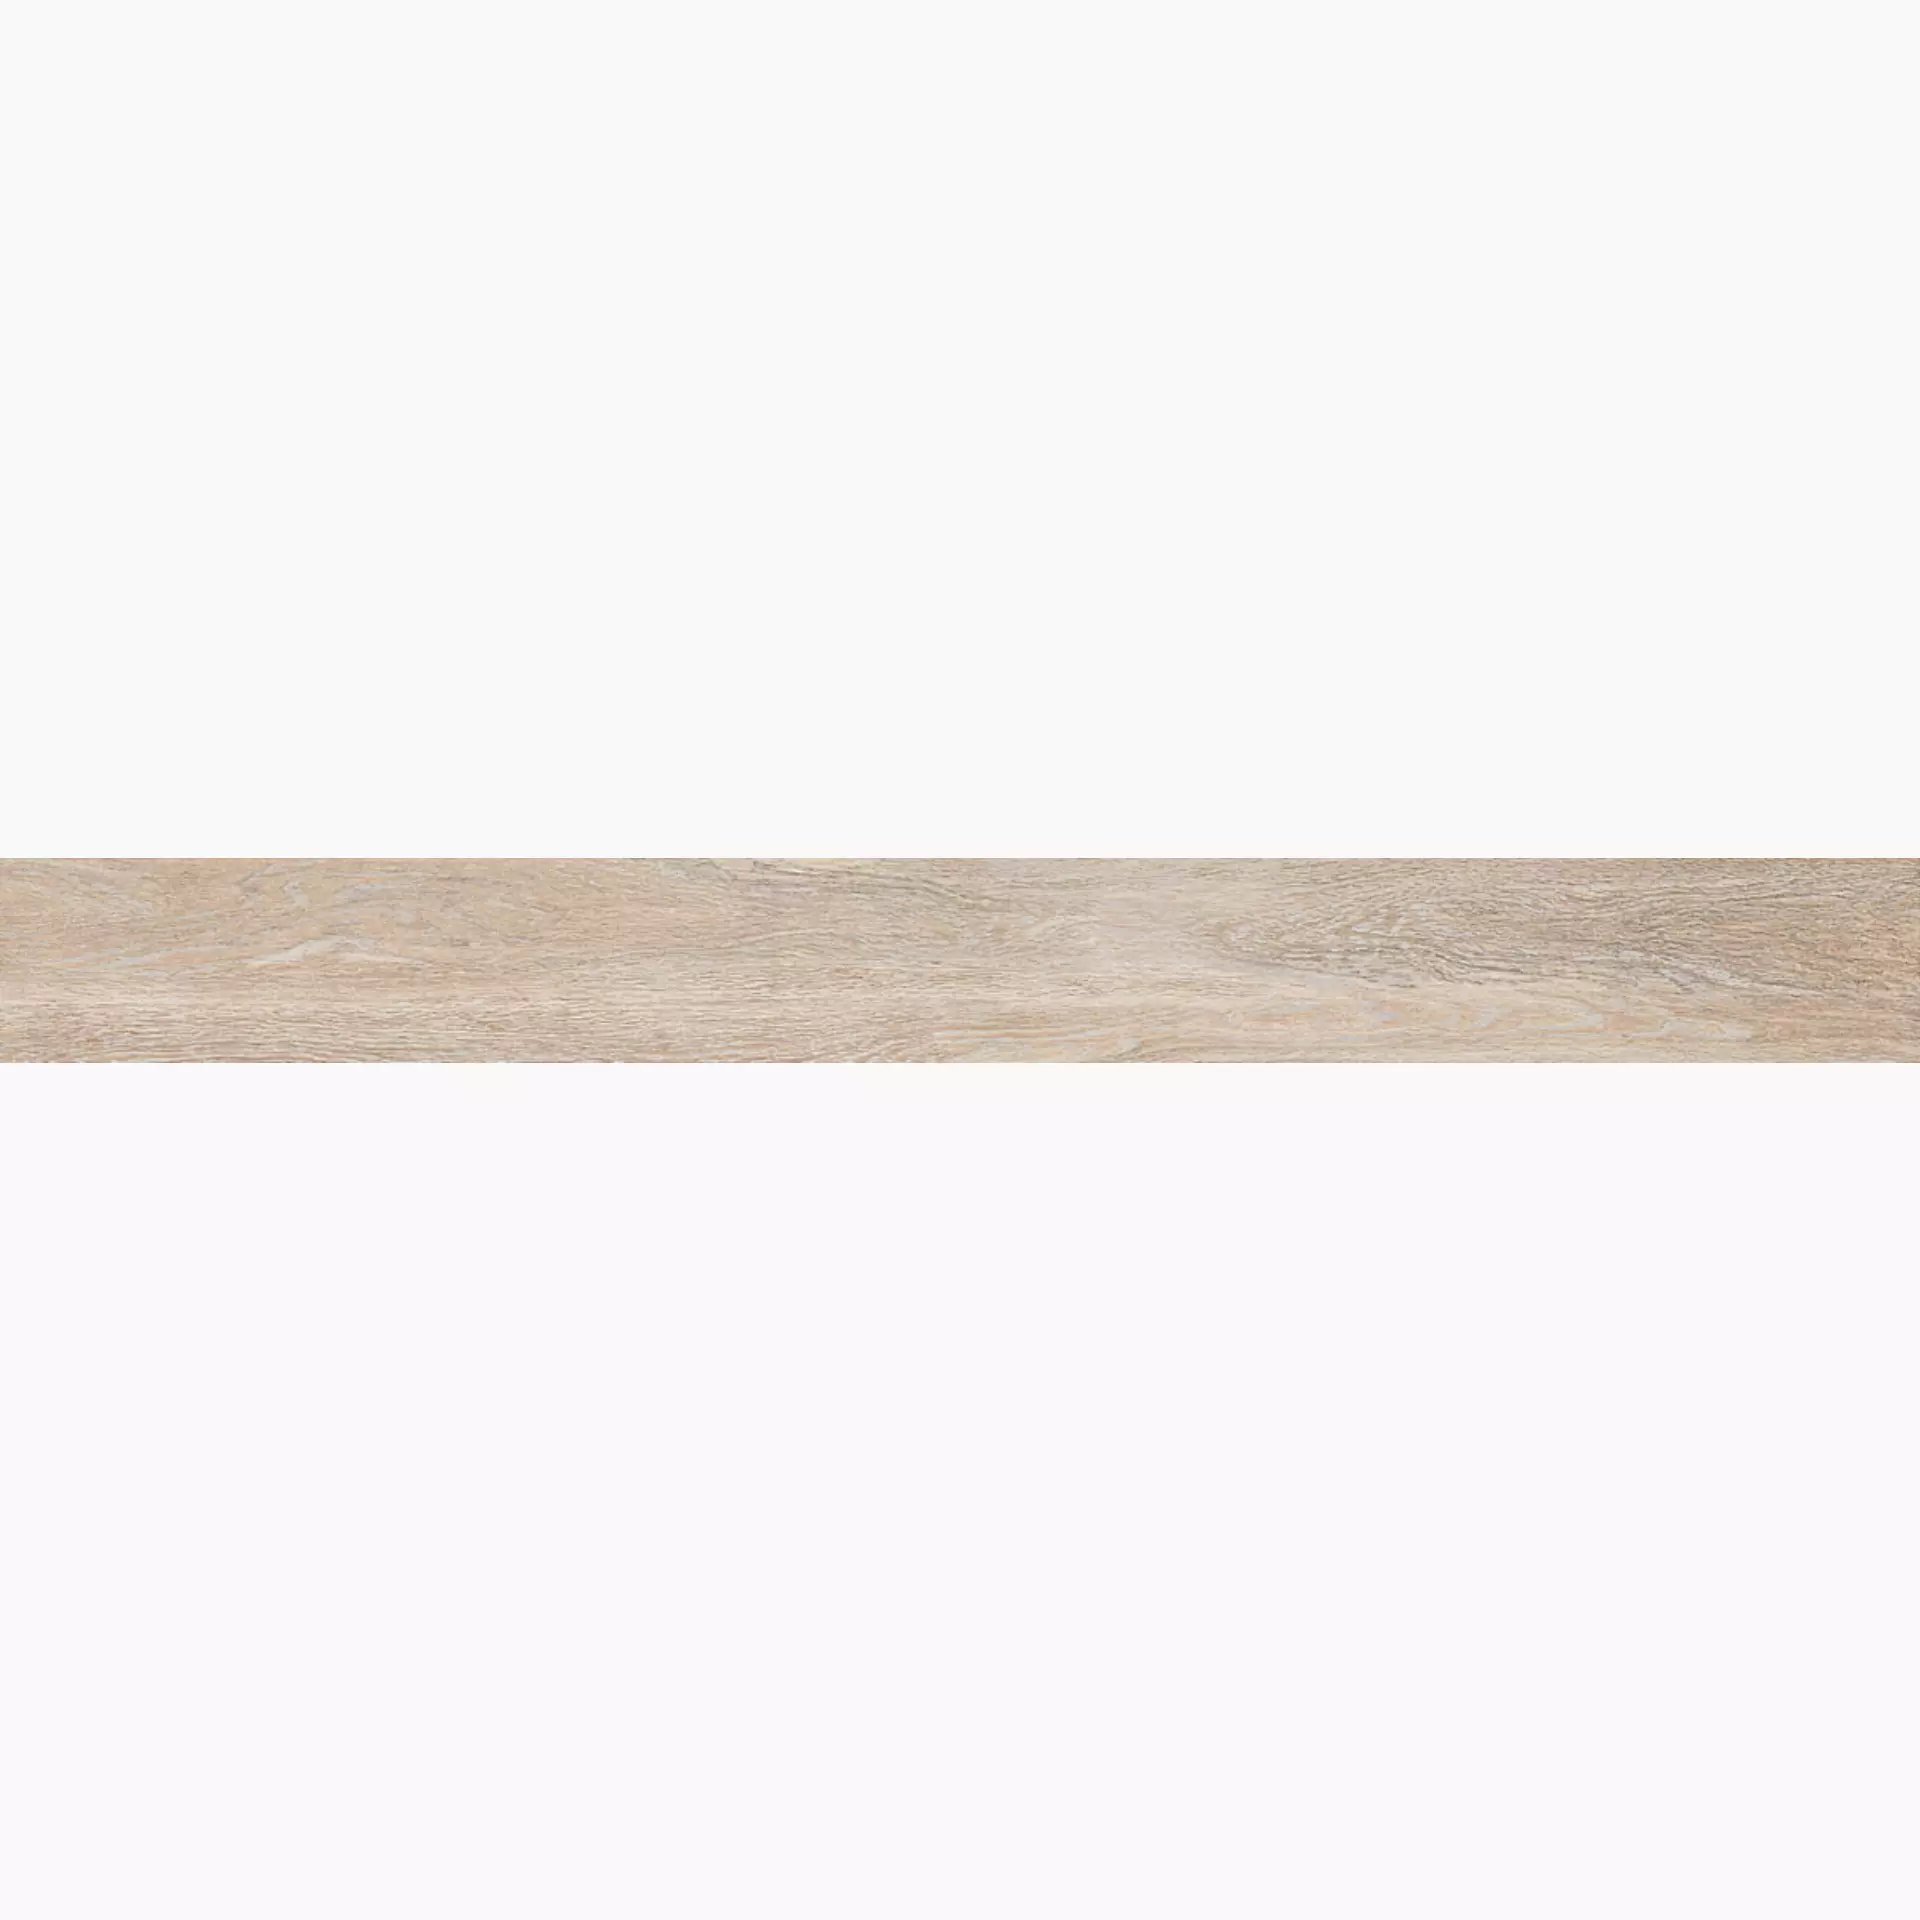 La Faenza Legno Beige Natural Slate Cut Matt 170461 20x180cm rectified 10mm - LEGNO 2018B RM